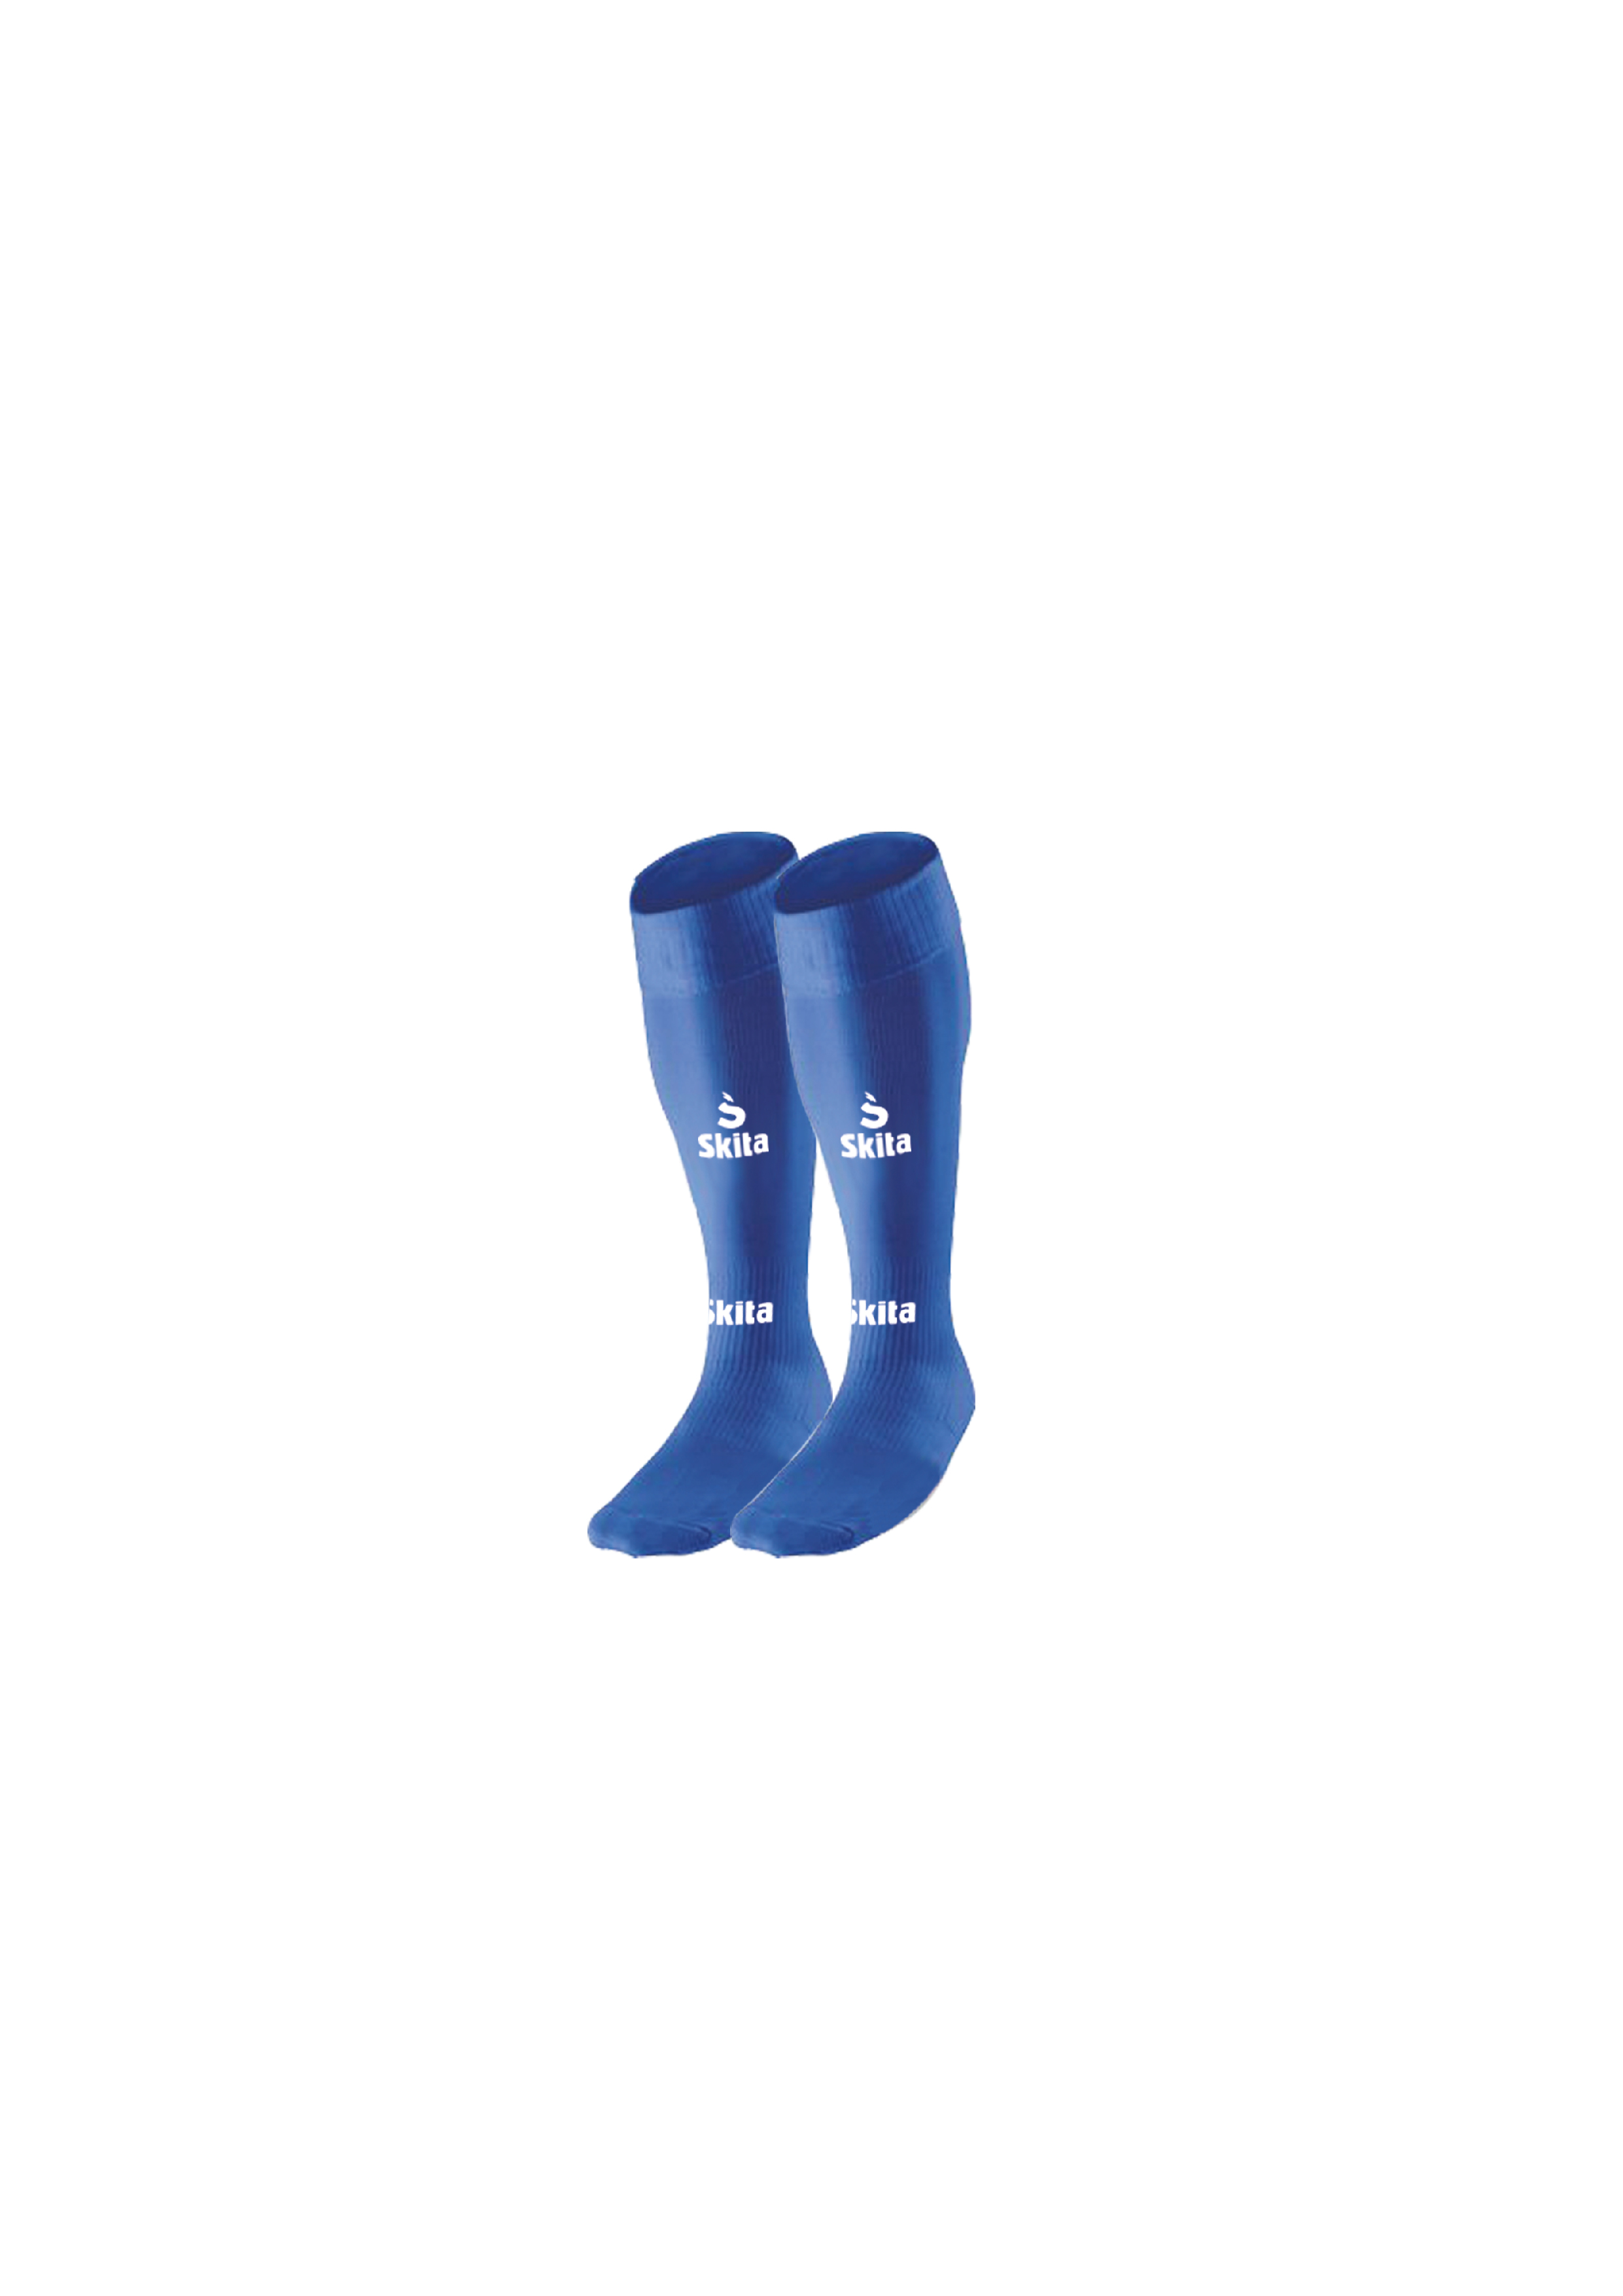 Chaussettes bleu nuit  (AJLB FOOTBALL)